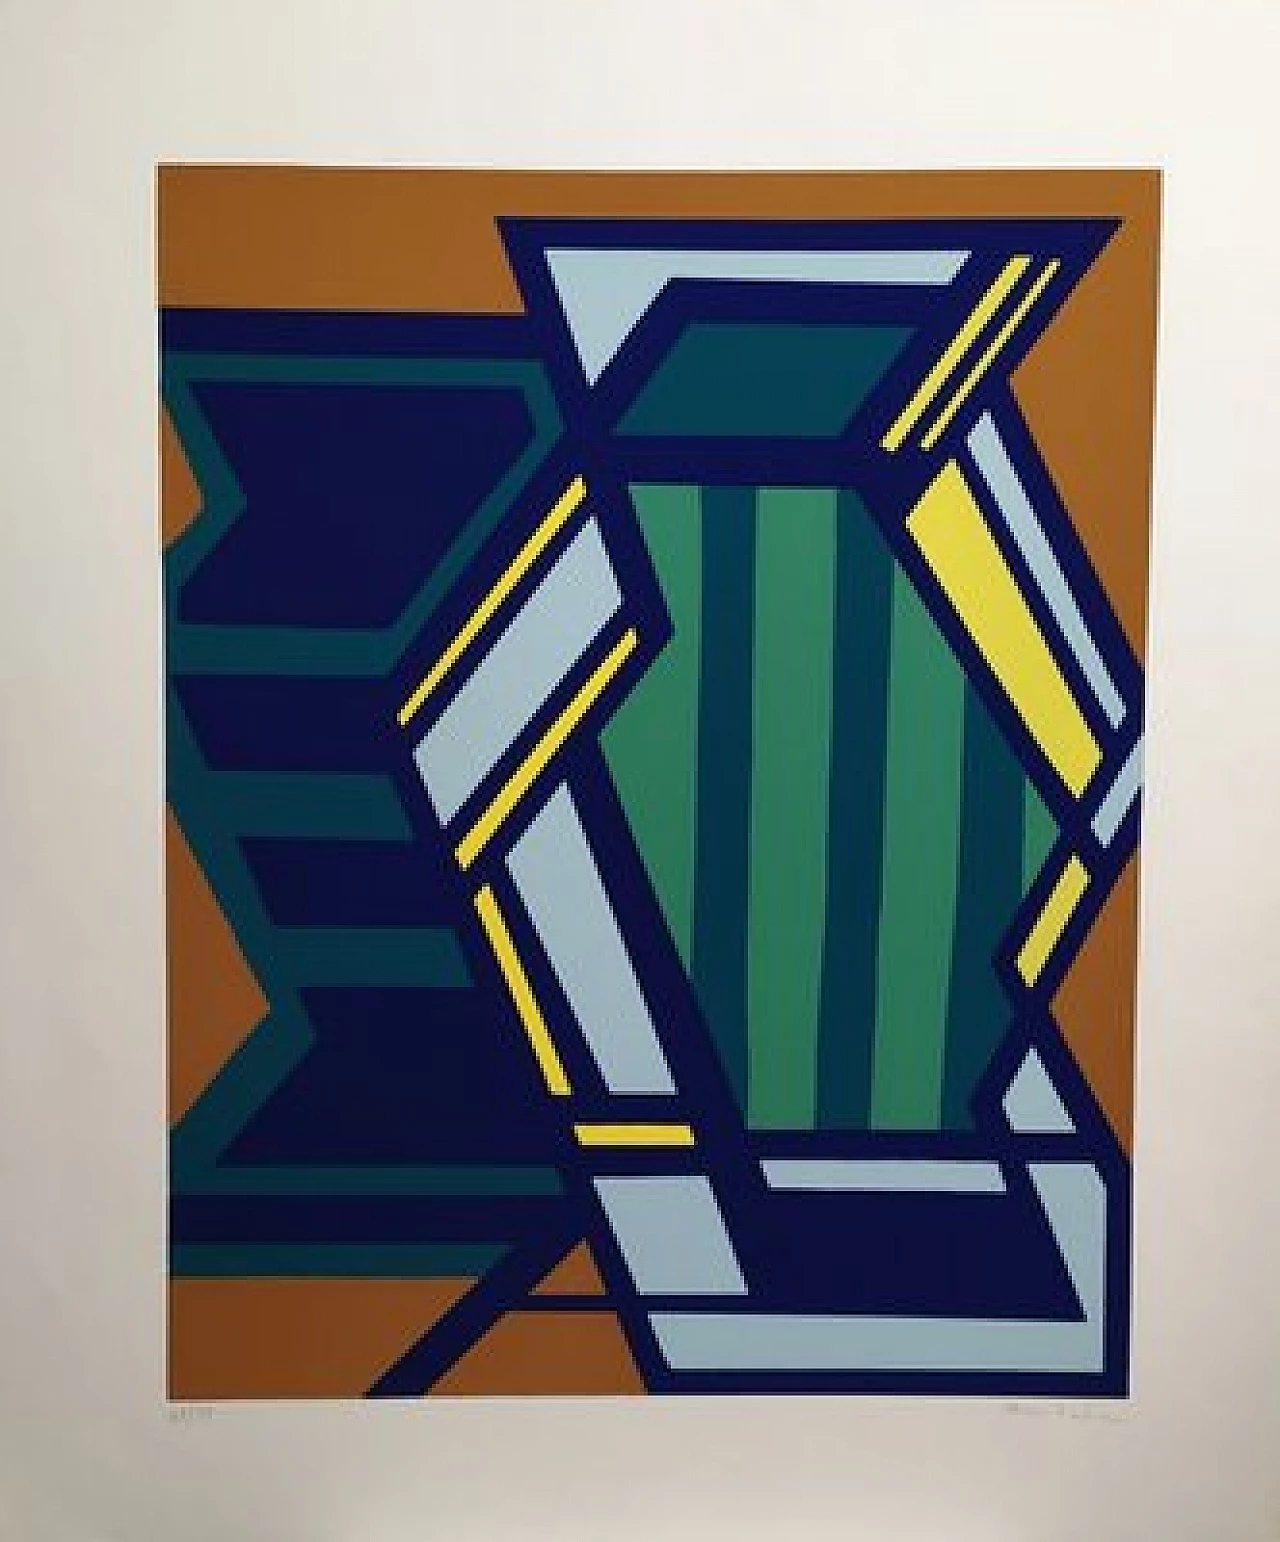 Mario Radice, abstract composition, screen print, 1972 1